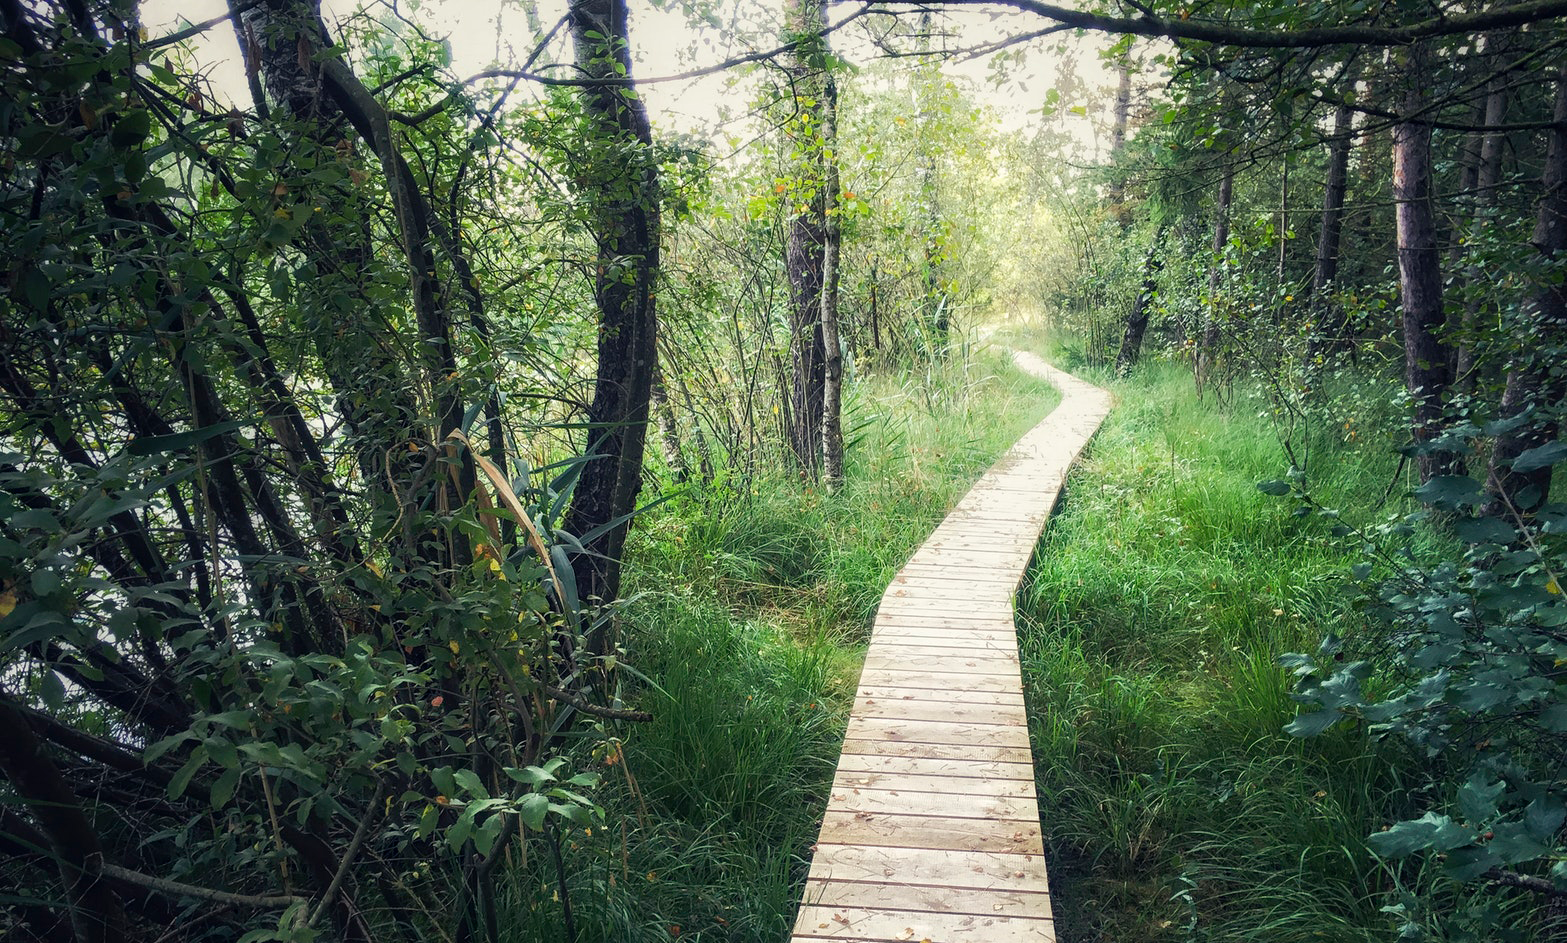 A wooden path winds through a green forest.